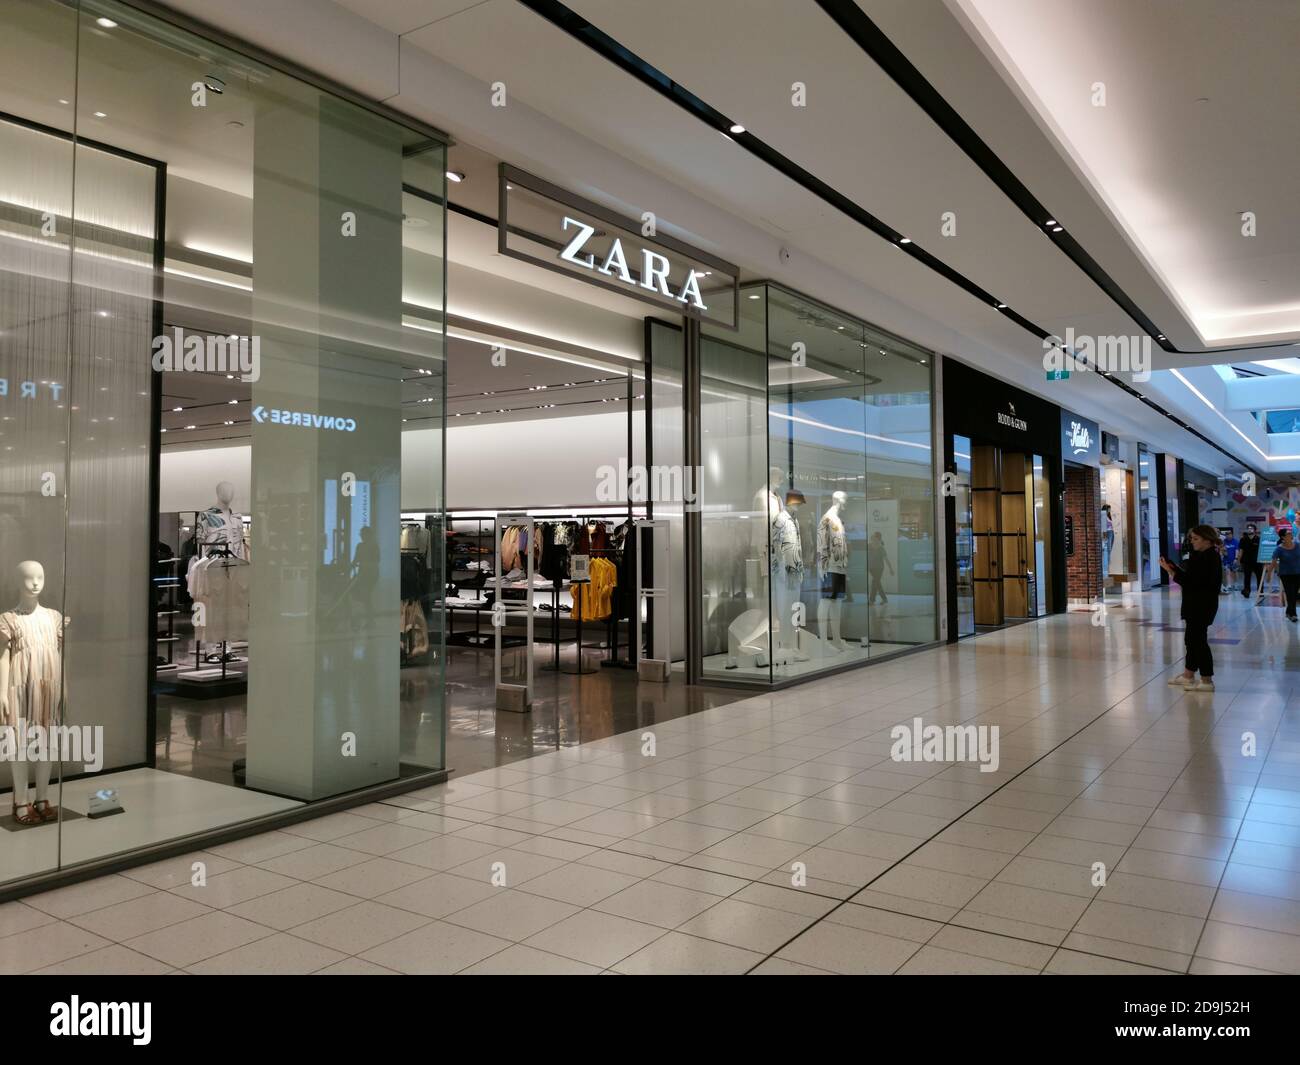 AUCKLAND, NEW ZEALAND - Nov 03, 2020: View of Zara sore in Sylvia Park  Shopping Centre mall Stock Photo - Alamy